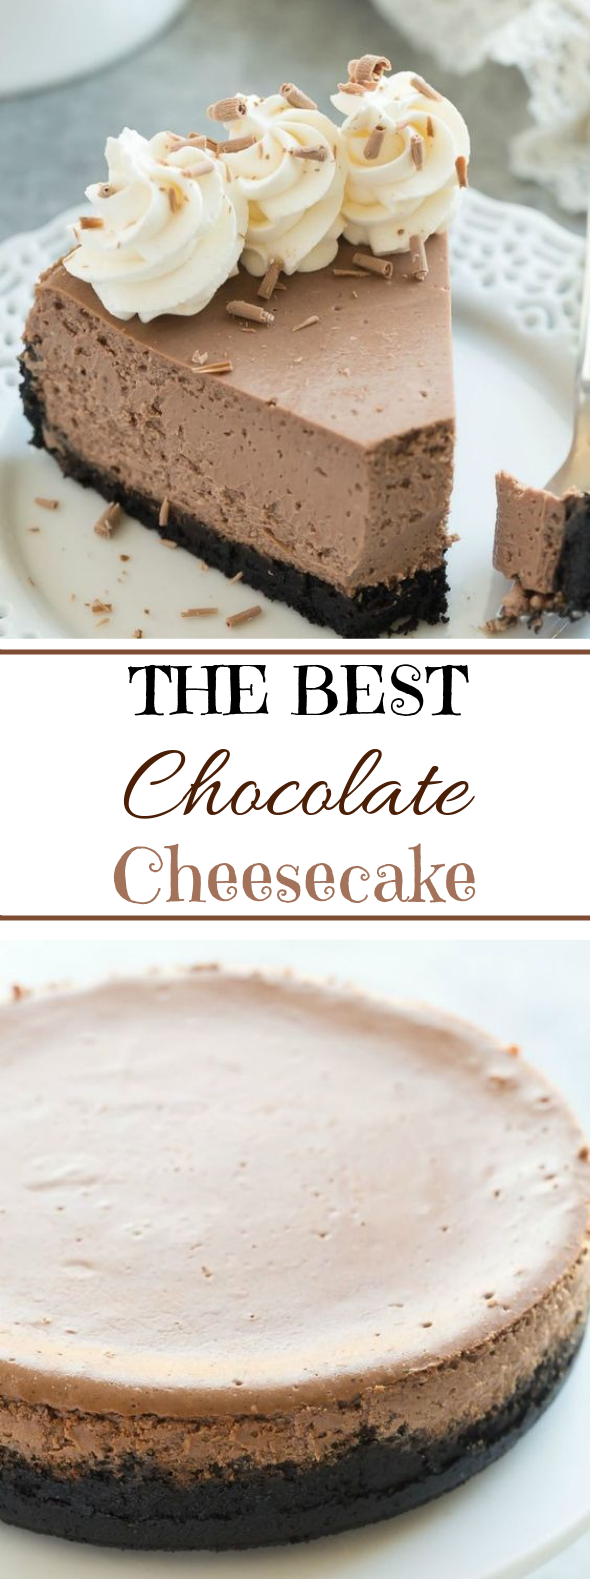 The BEST Chocolate Cheesecake #cake #desserts